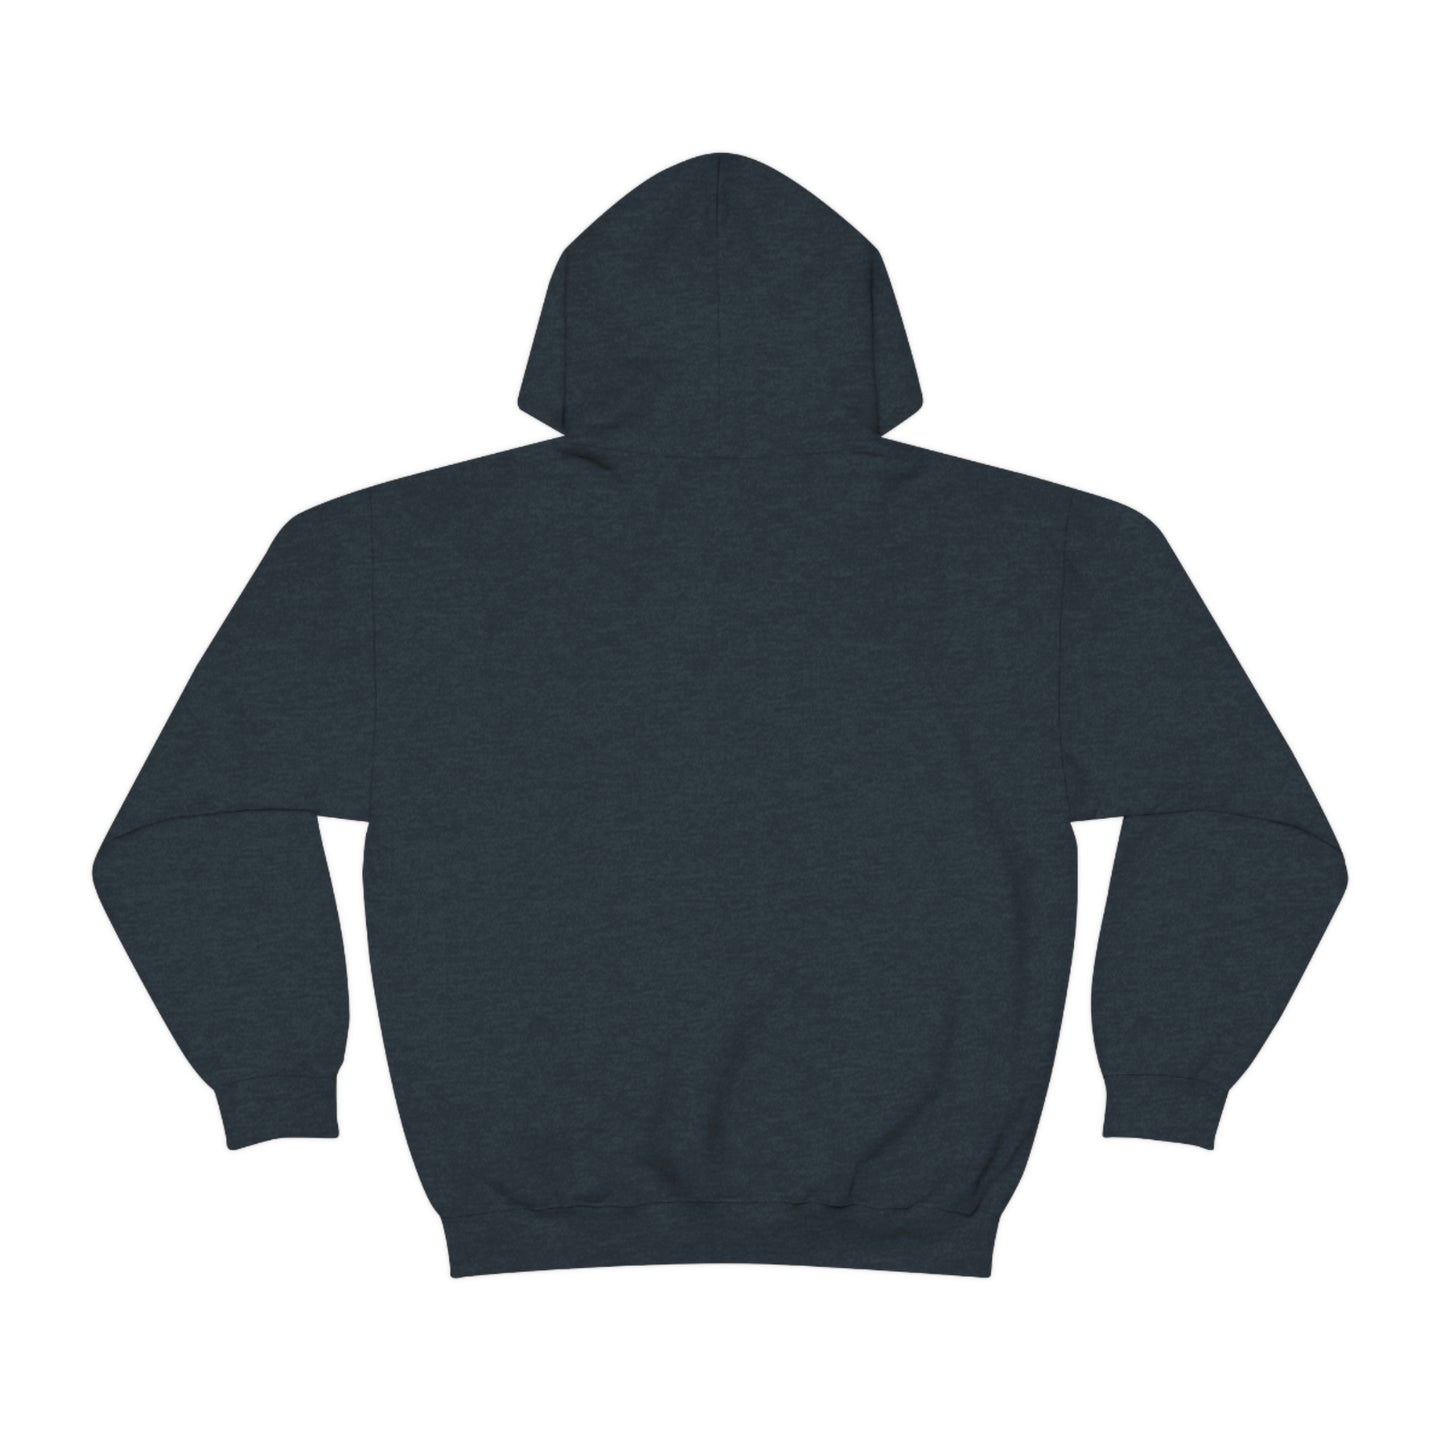 New York Unisex Heavy Blend™ Hooded Sweatshirt